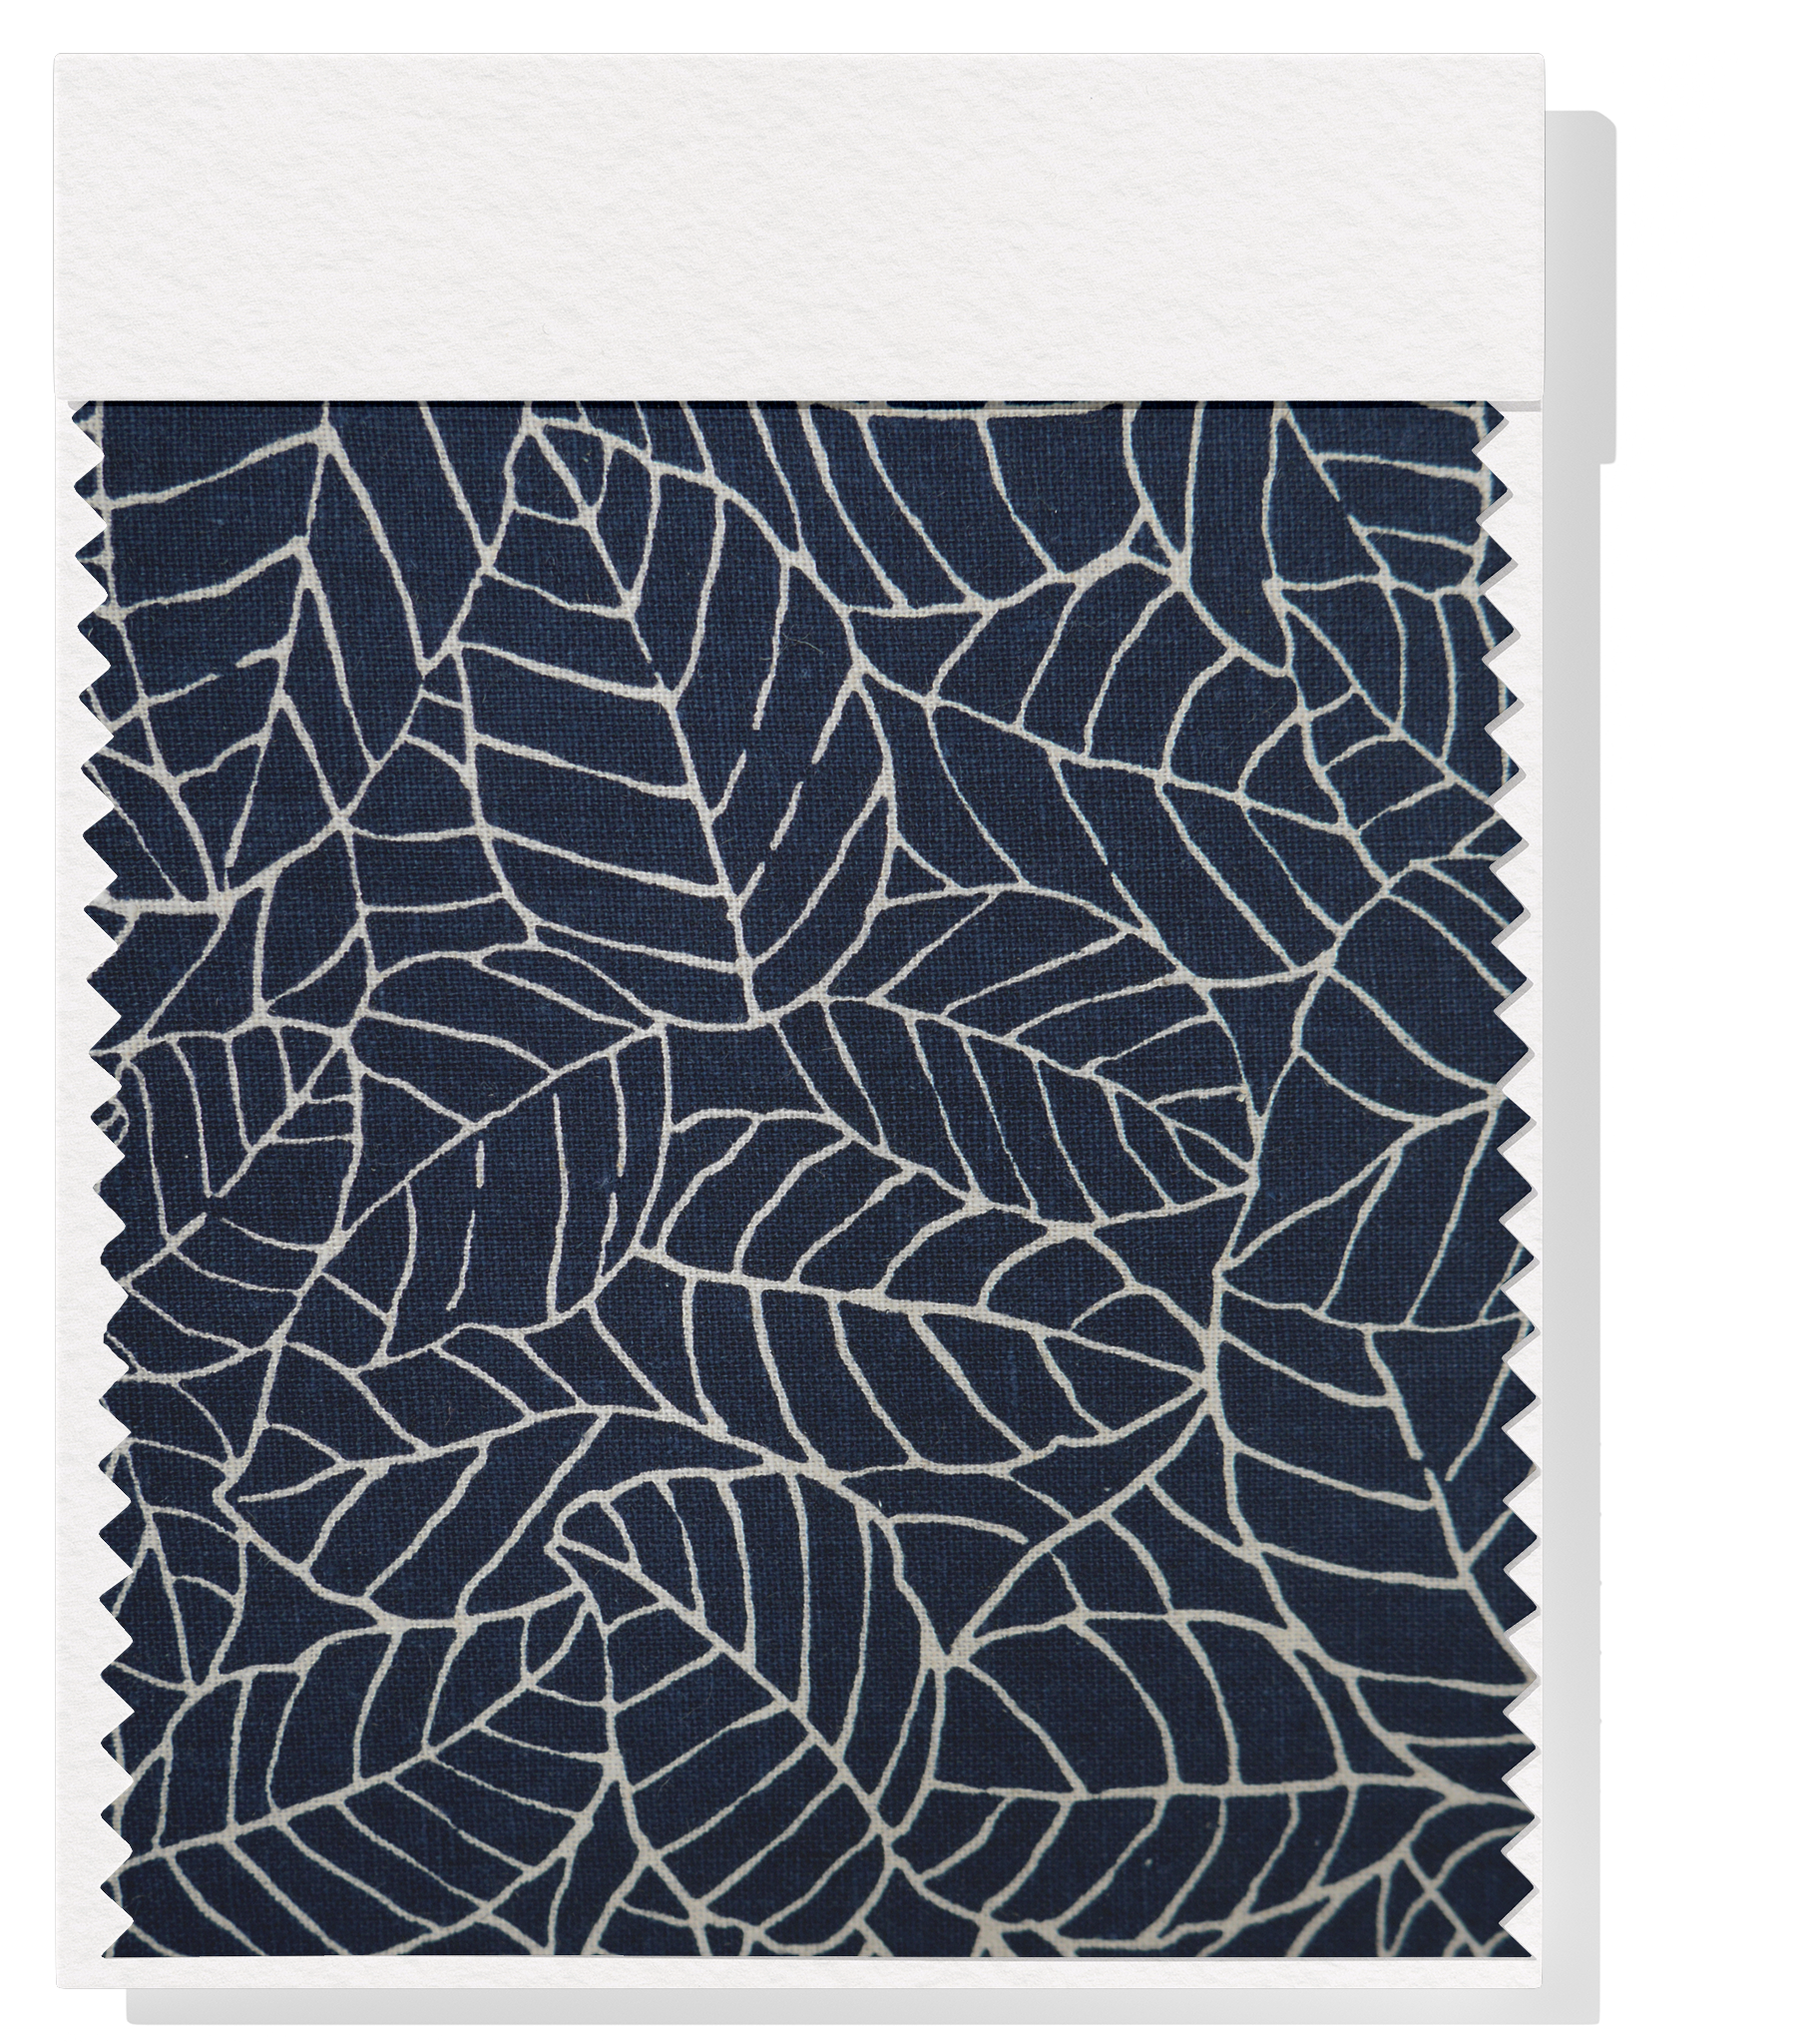 Printed Linen / Cotton $28.00p/m - Navy Leaf